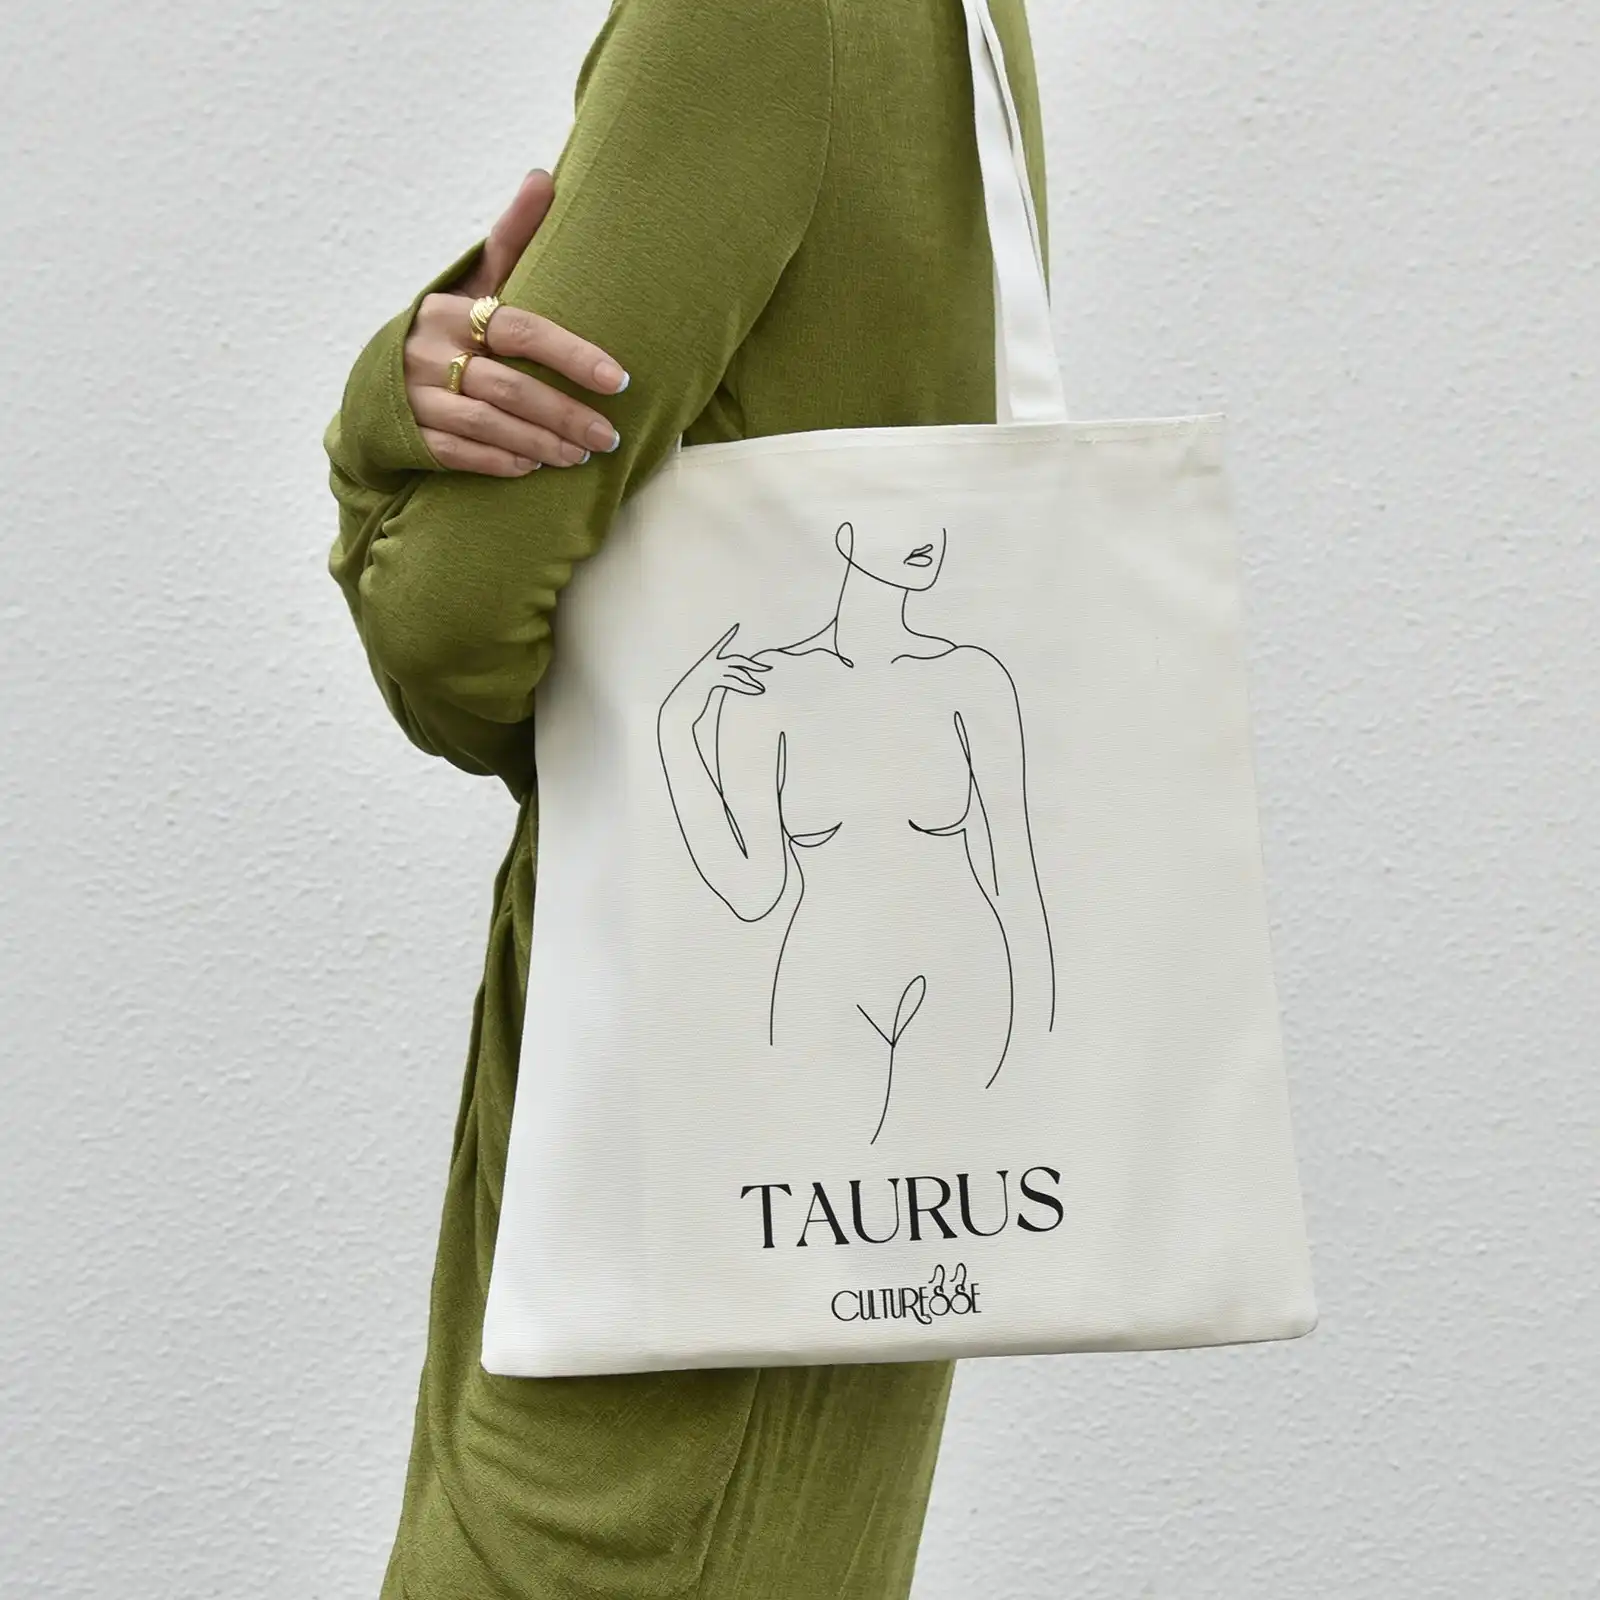 Culturesse She Is Taurus Eco Zodiac 38cm Muse Tote Bag Women's Handbag White